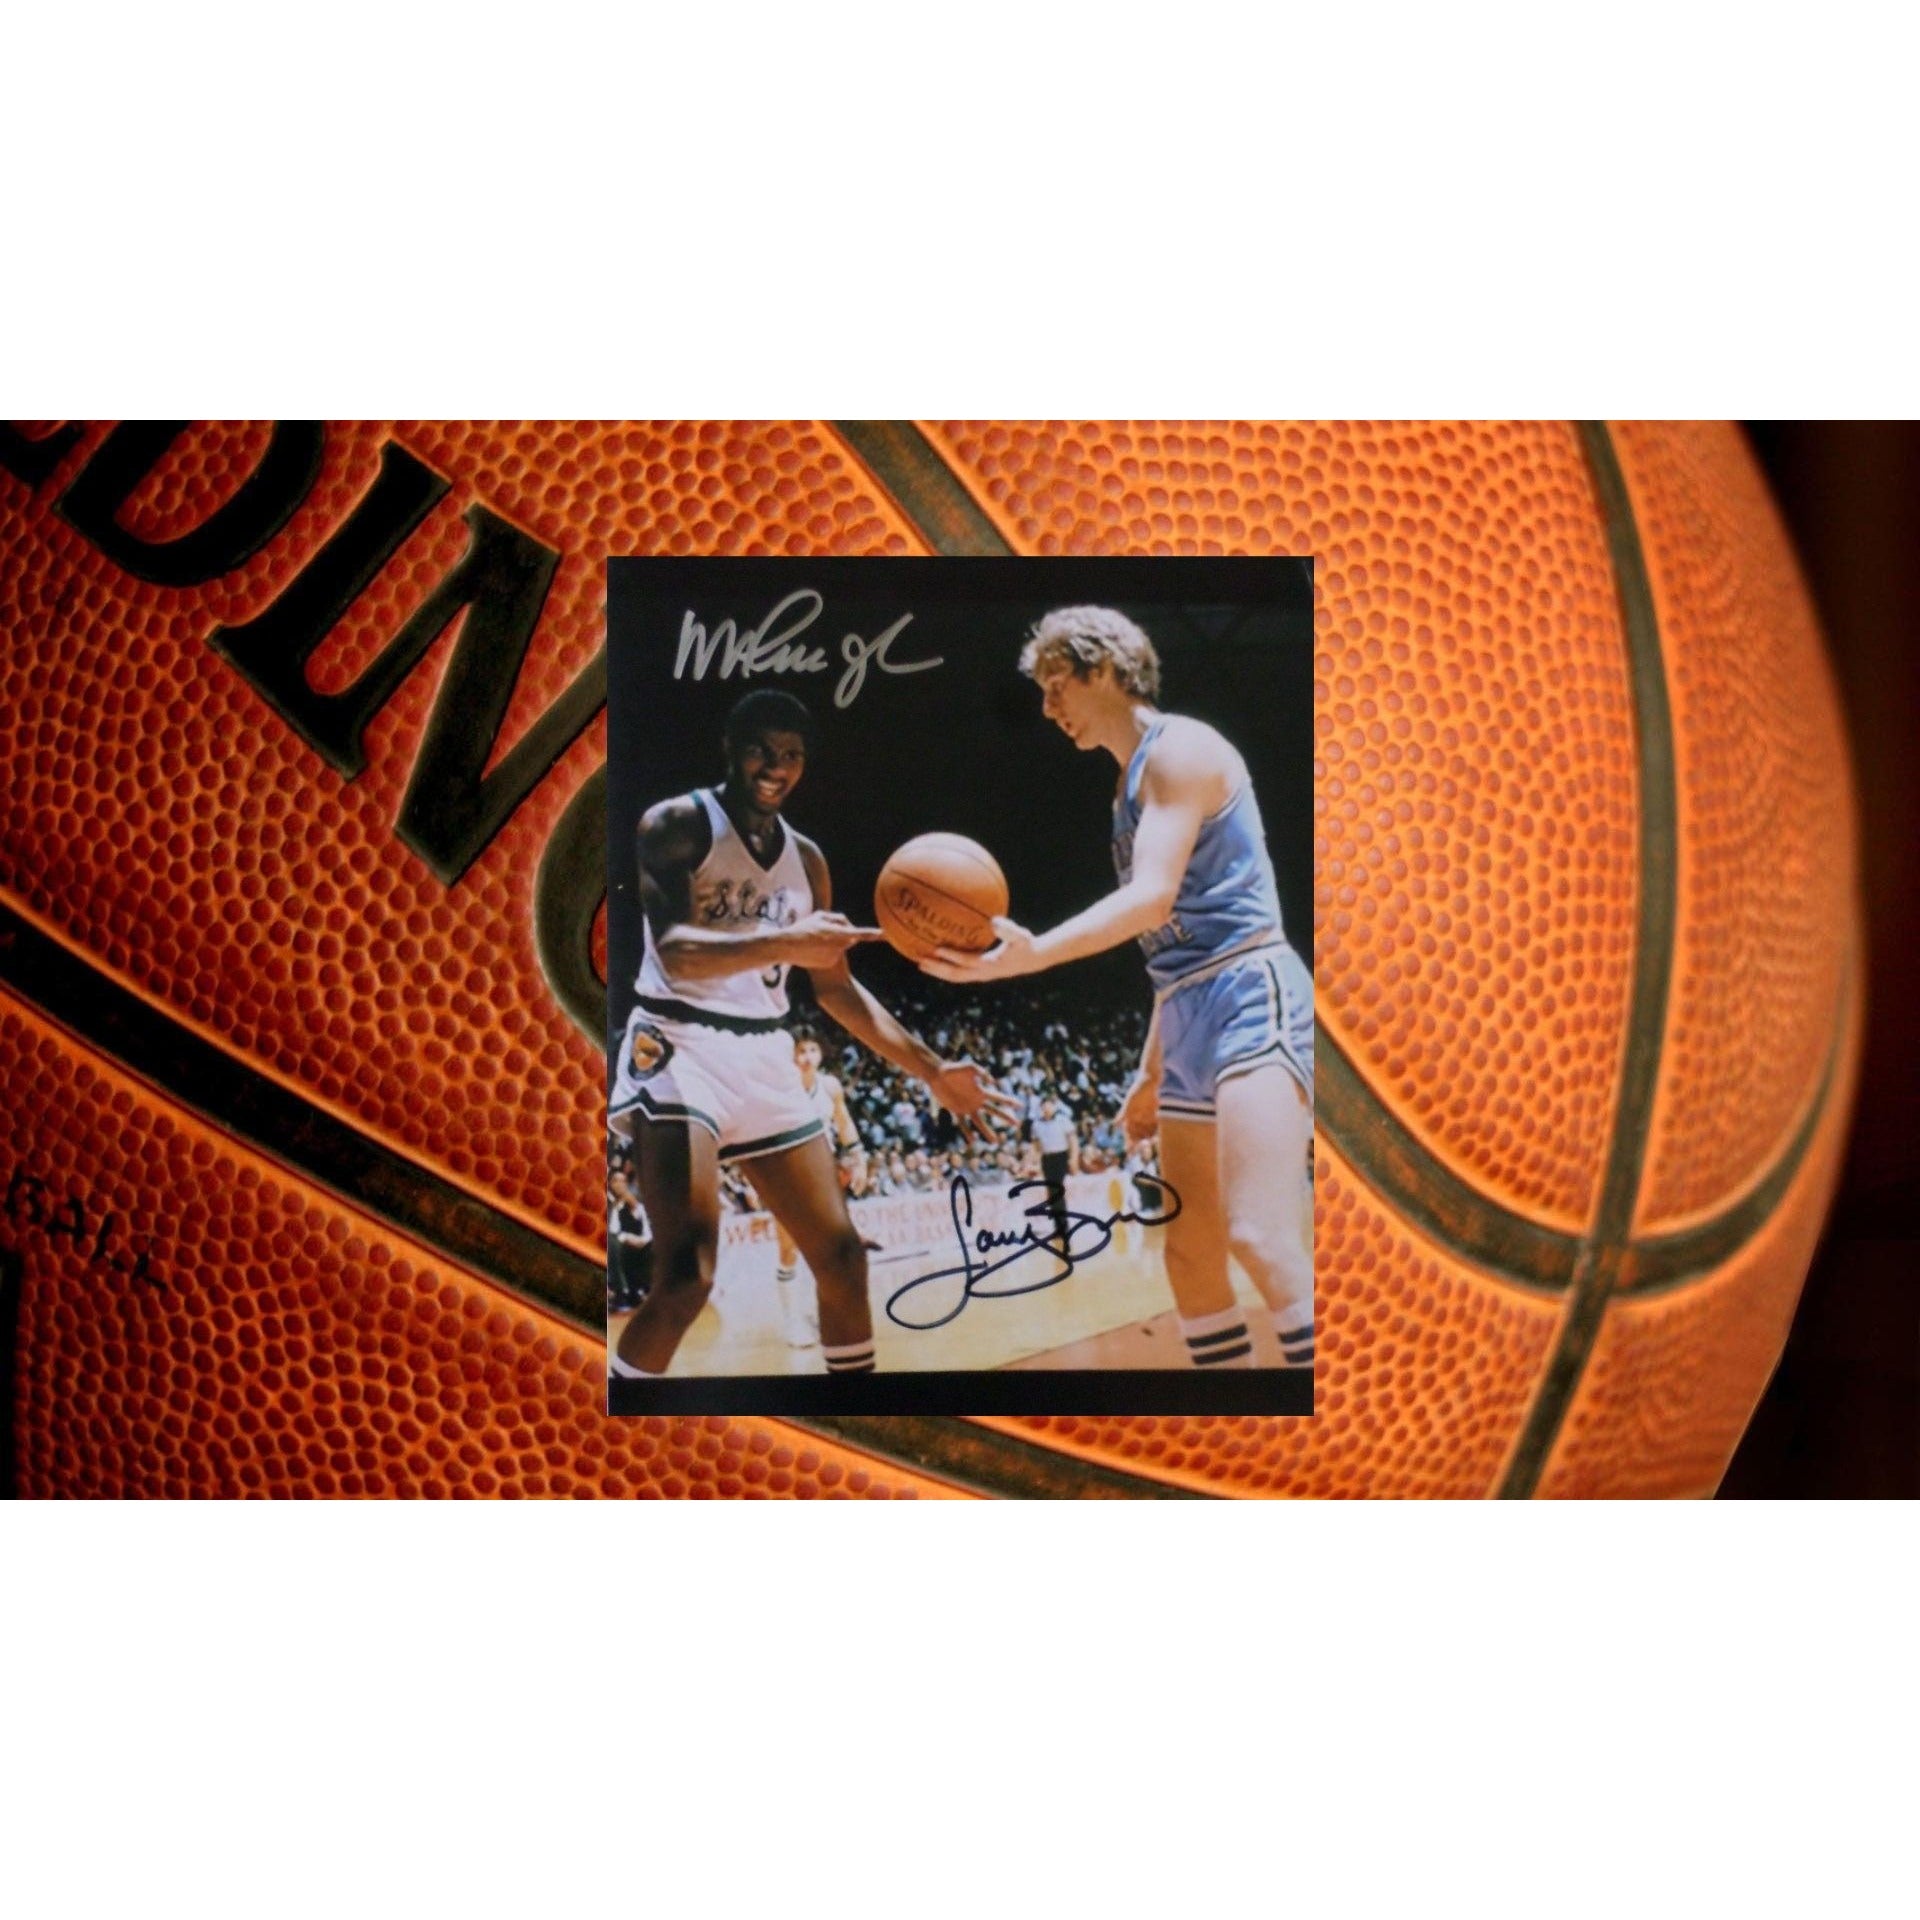 Larry Bird and Magic Johnson 8 x 10 signed photo